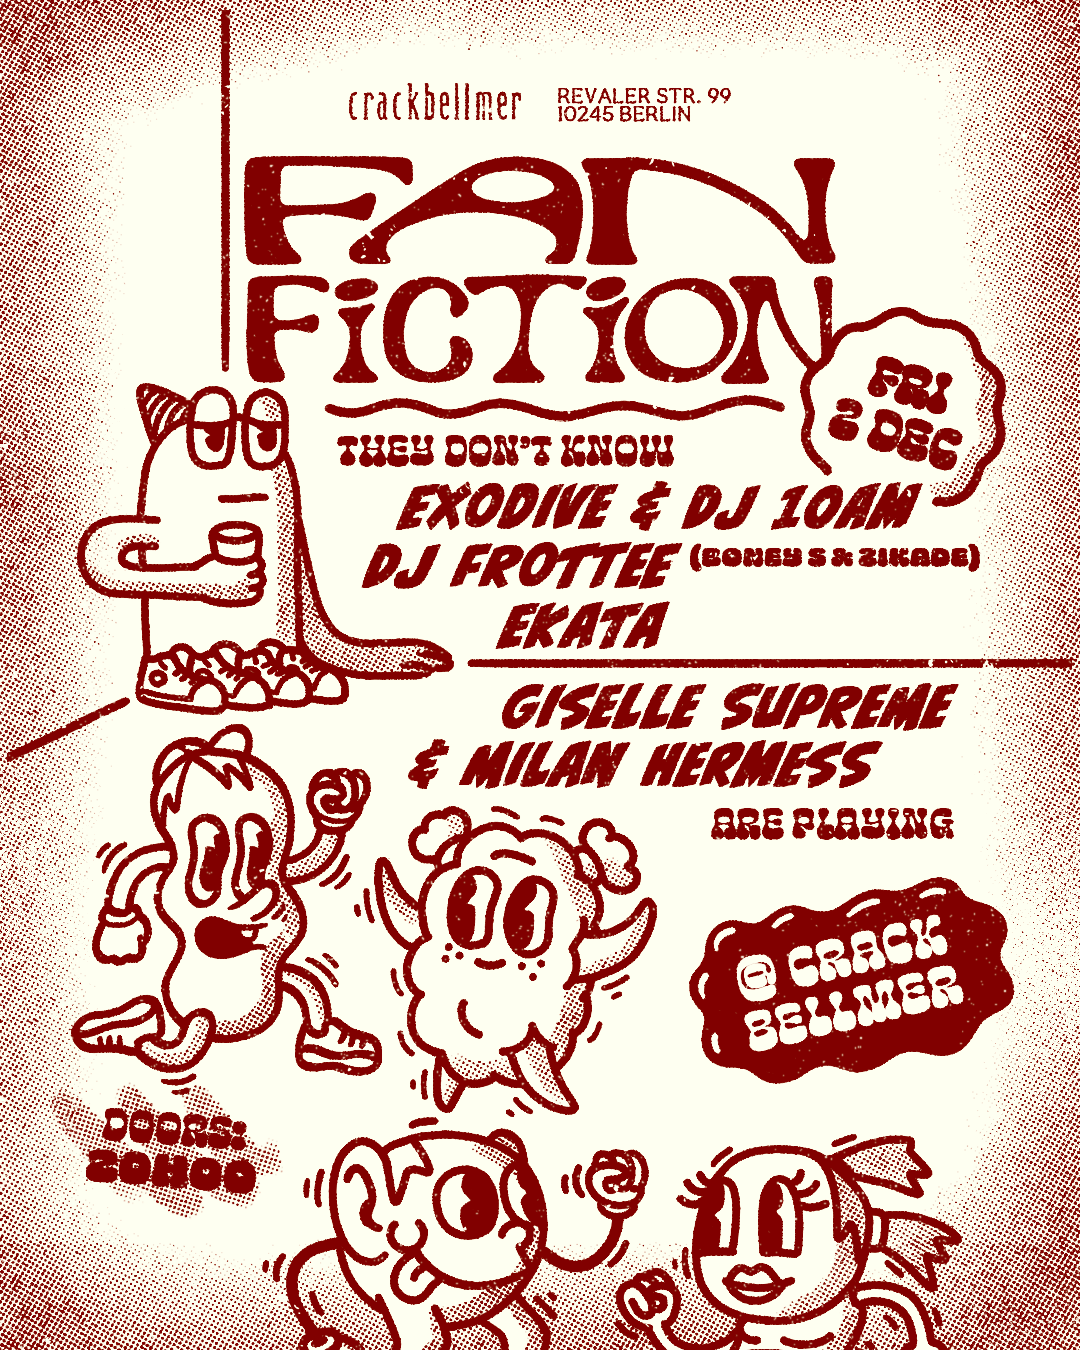 Fan Fiction with Lazercat, Naks, DJ Frottee, EKATA, Giselle Supreme, Milan Hermess - フライヤー表